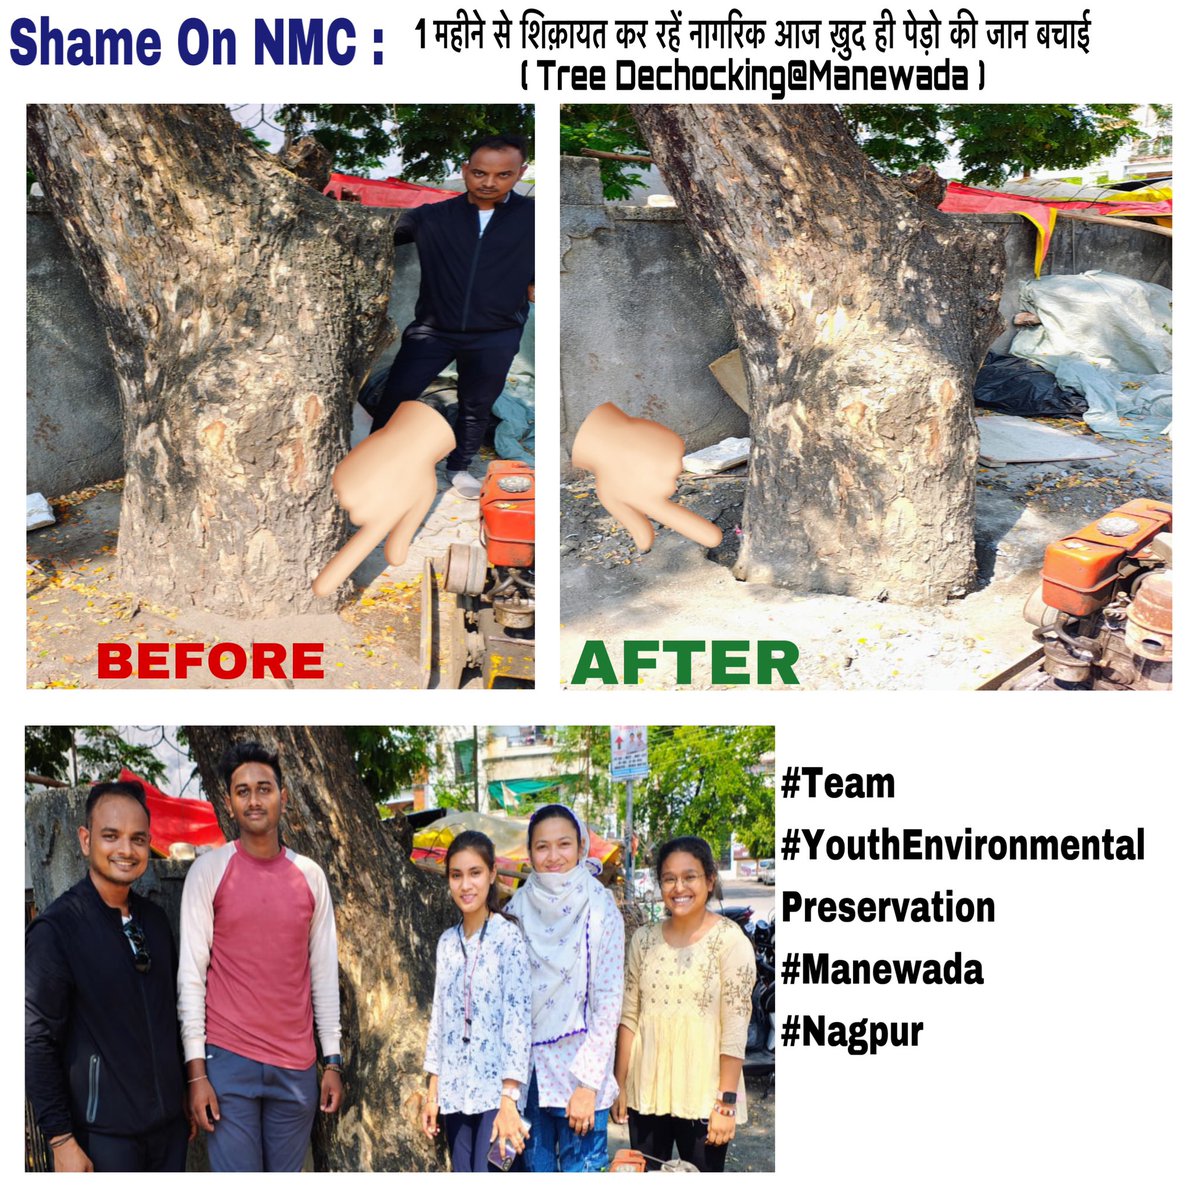 Shame on NmC : १ महीने से नागरिक की शिकायत पर action ना होने पे आज #Nagpur #Youth ने बचाई पेड़ की जान @ngpnmc @nmccommissioner @vrNagpur @YogitaKhan1 @10chandana @mehashar @mankab091 @anjaya1905 @ProshuncTOI @vaibhavgTOI @ApurwaBawangade @rohandpashine #Manewada #SaveTrees